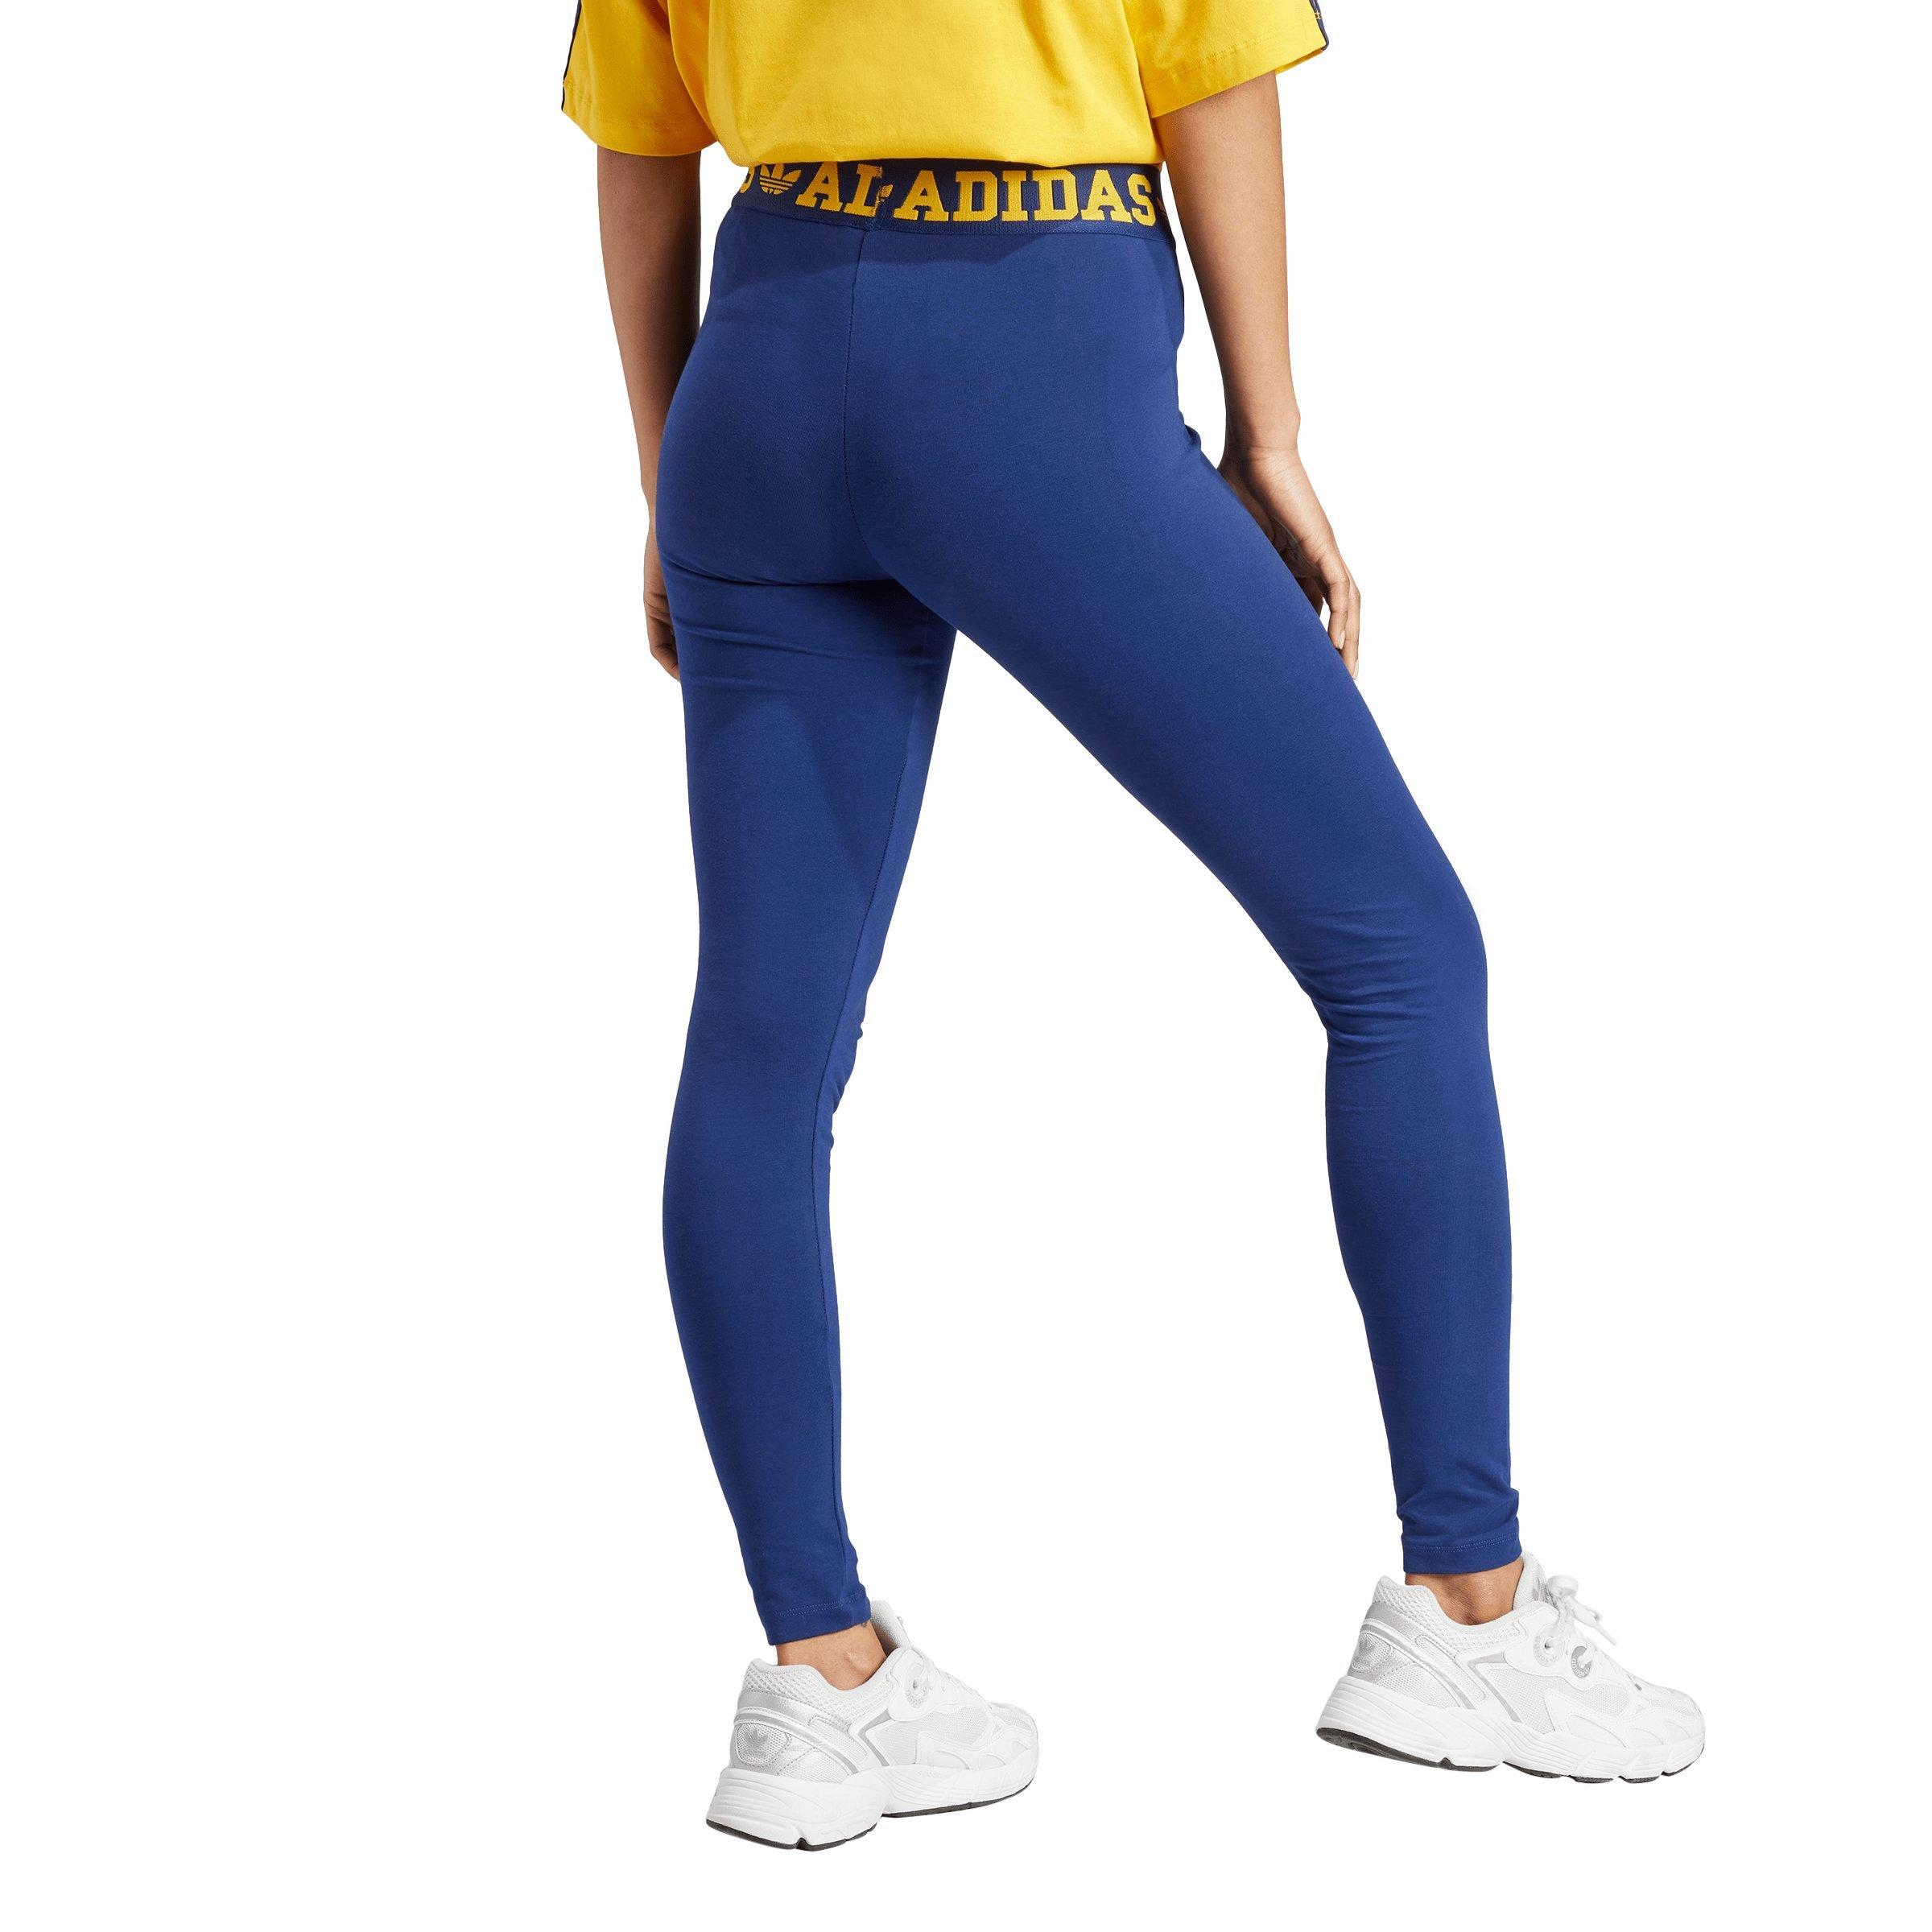 Buy Adidas women sportswear fit brand logo training leggings navy